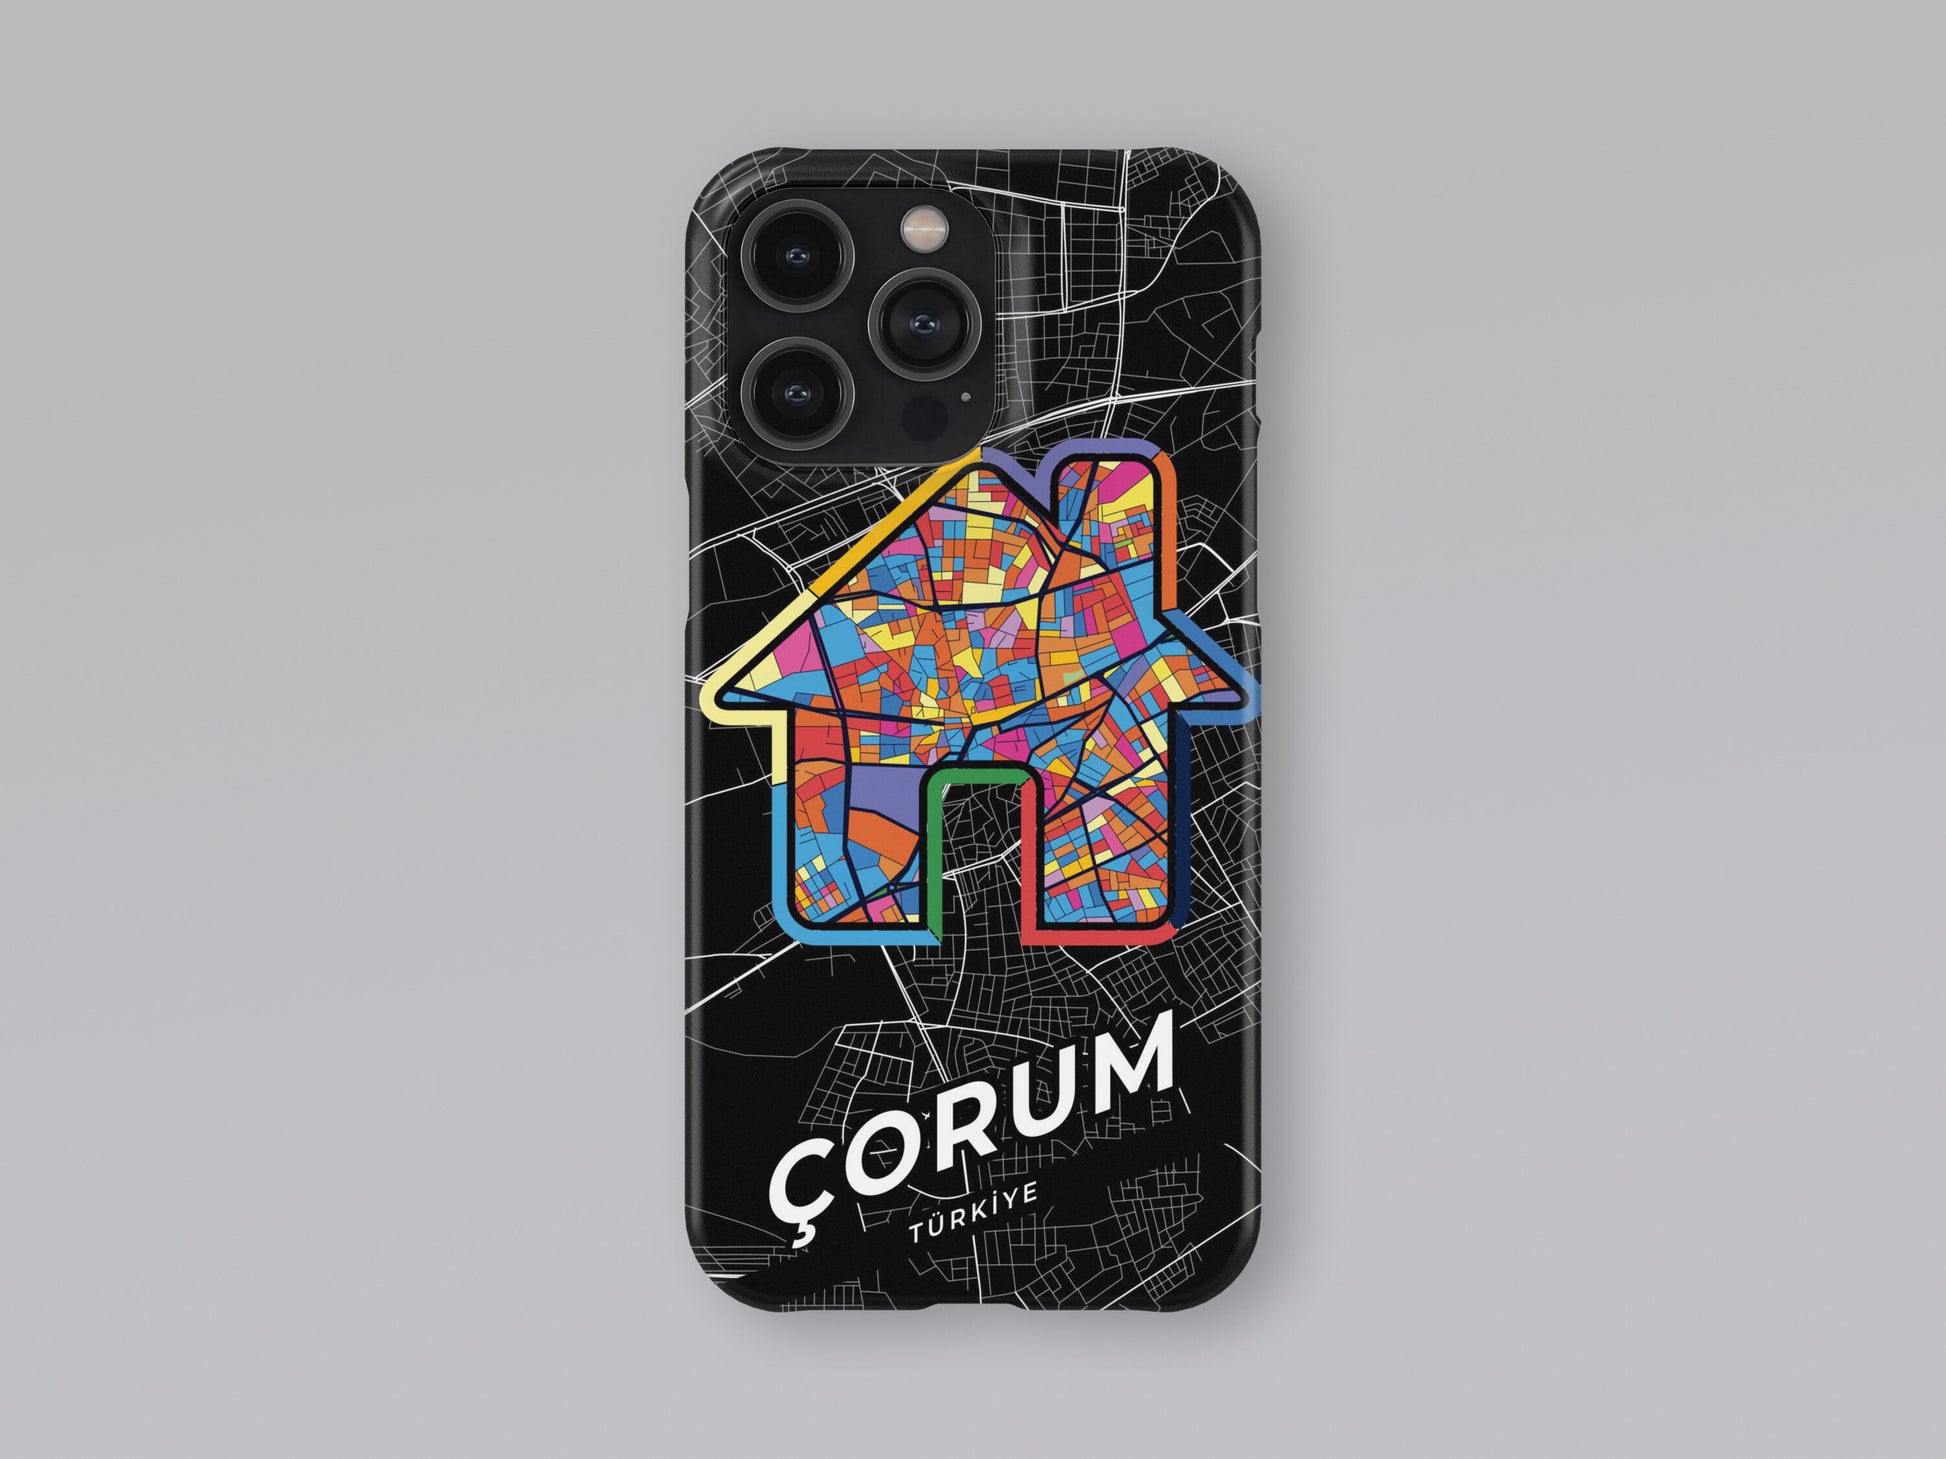 Çorum Turkey slim phone case with colorful icon. Birthday, wedding or housewarming gift. Couple match cases. 3